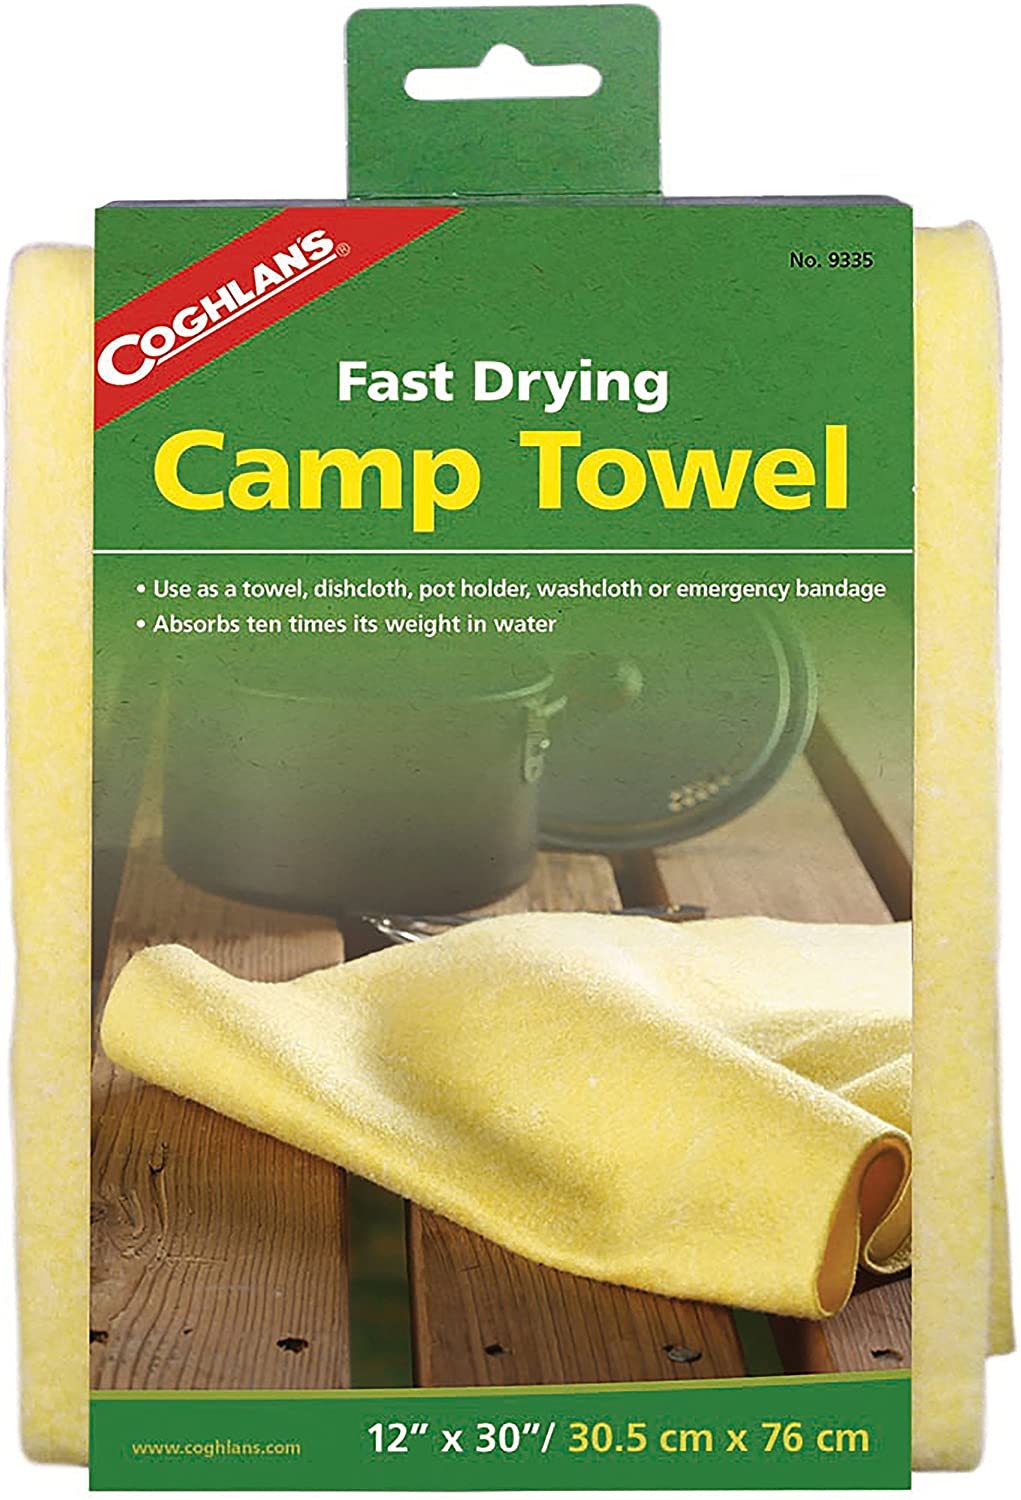 Coghlan's Camp Towel 30